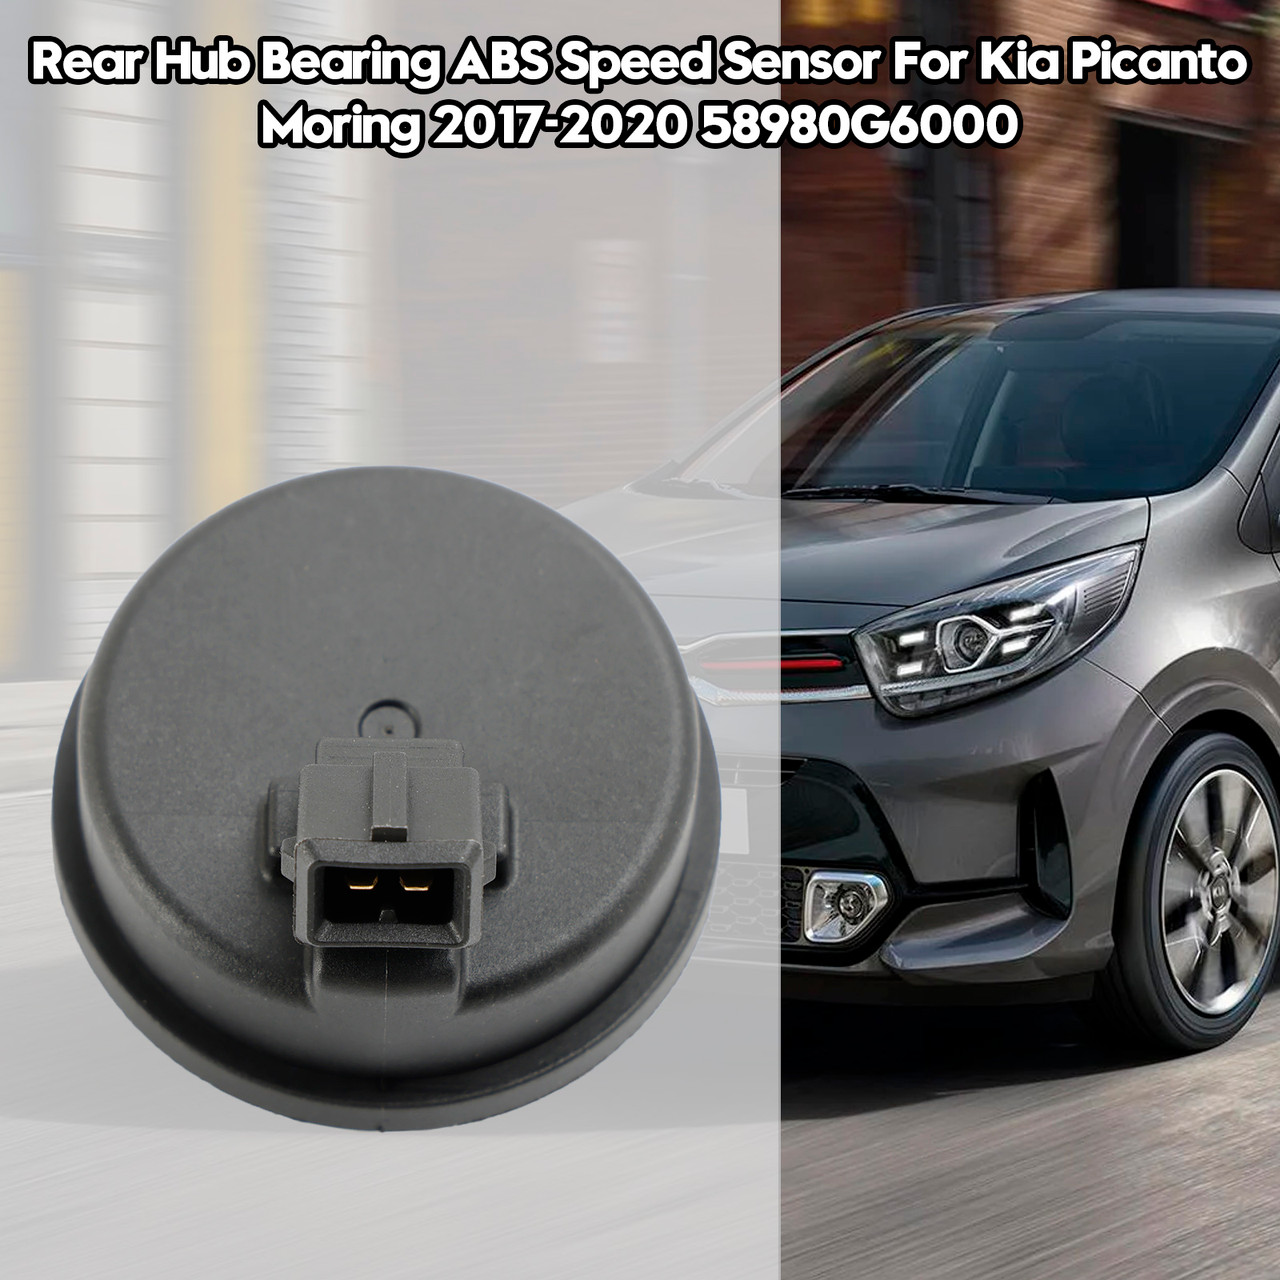 Rear Hub Bearing ABS Speed Sensor For Kia Picanto Moring 2017-2020 58980G6000